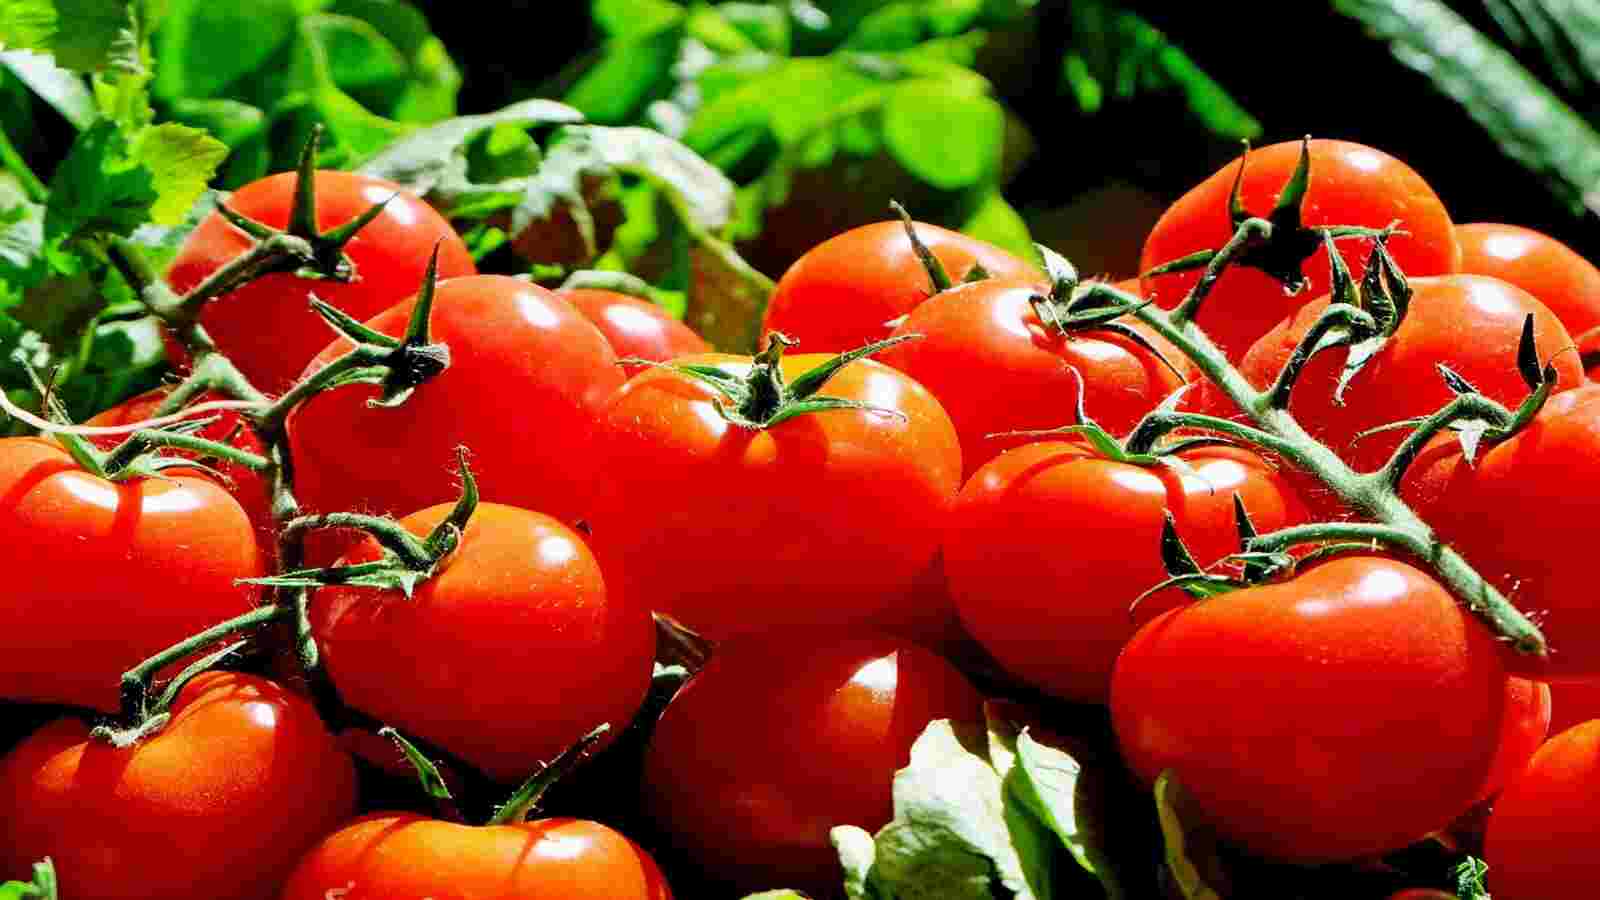 Tomato Health Benefits रोजाना टमाटर के सेवन करने से आपको मिलेंगे ये चमत्कारी फायदे (Image Credit: Pixabay)